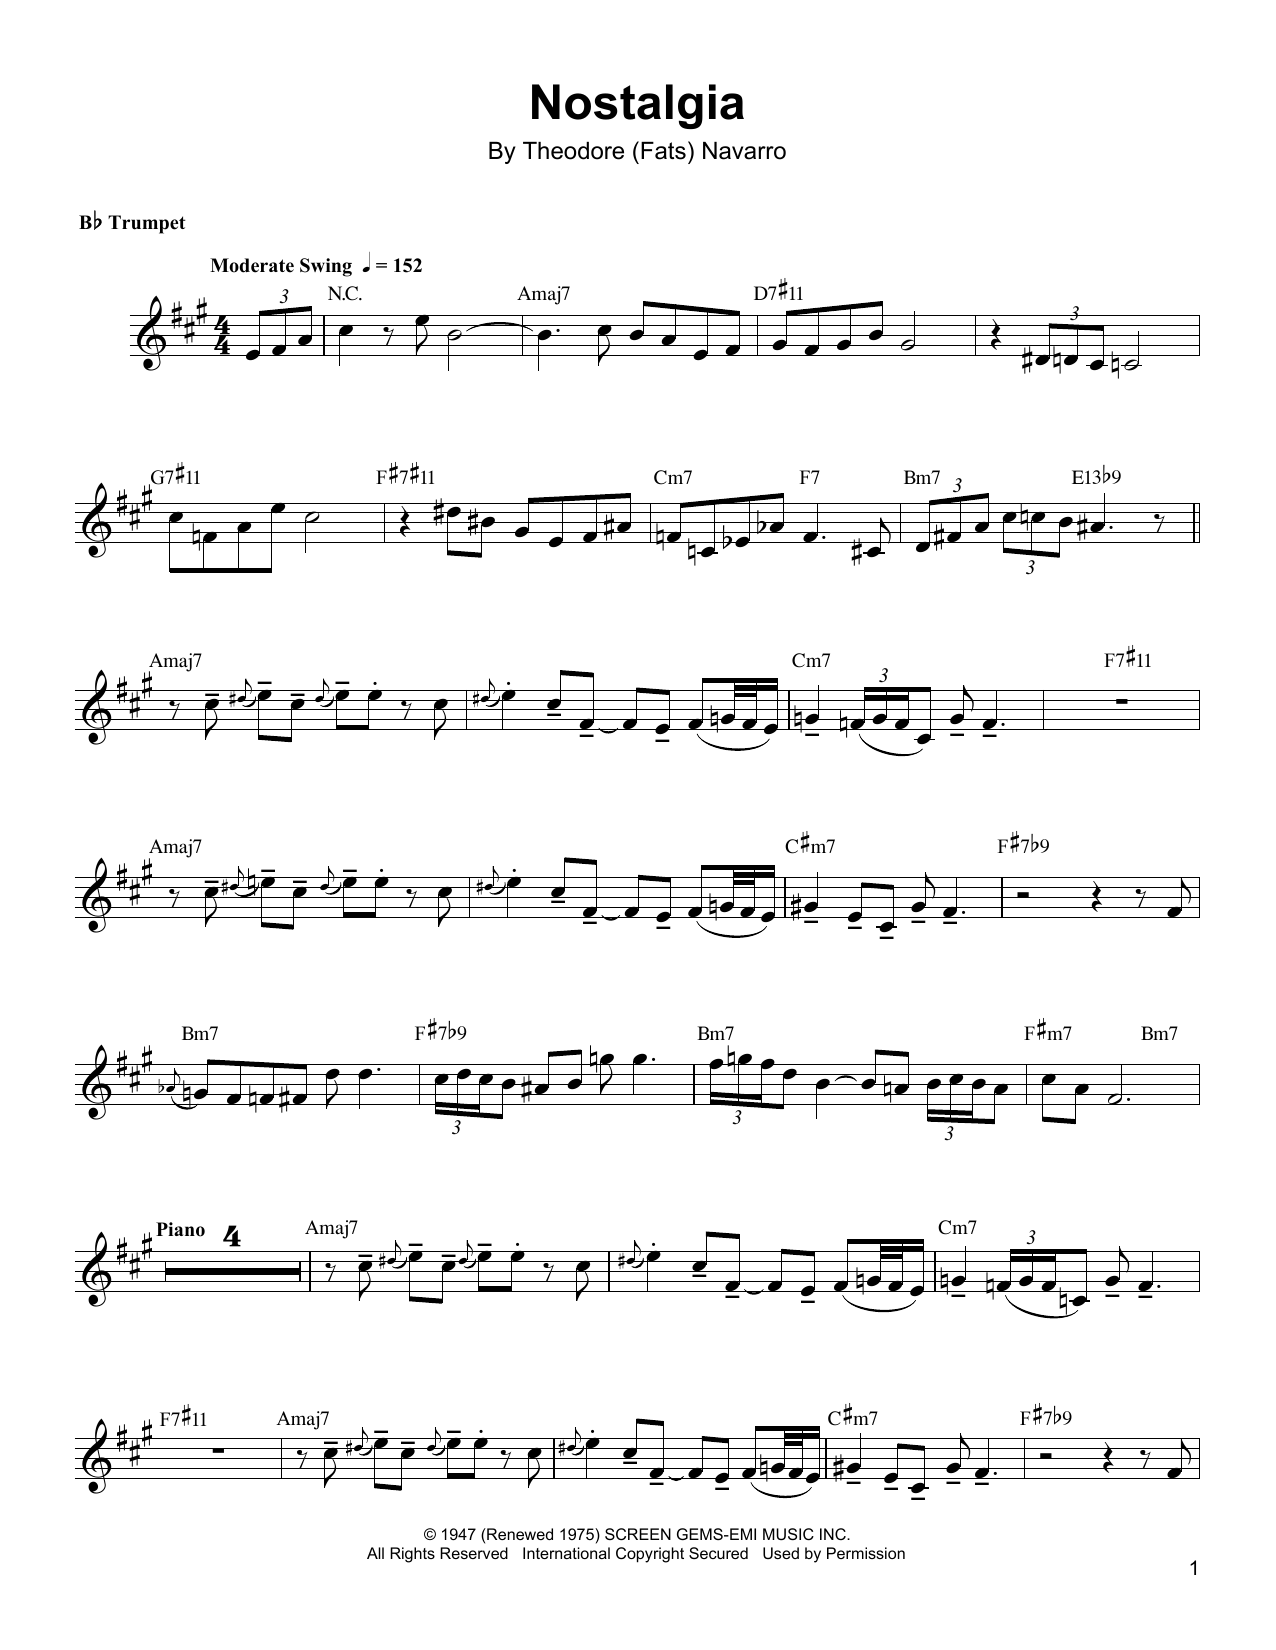 Arturo Sandoval Nostalgia Sheet Music Notes & Chords for Trumpet Transcription - Download or Print PDF